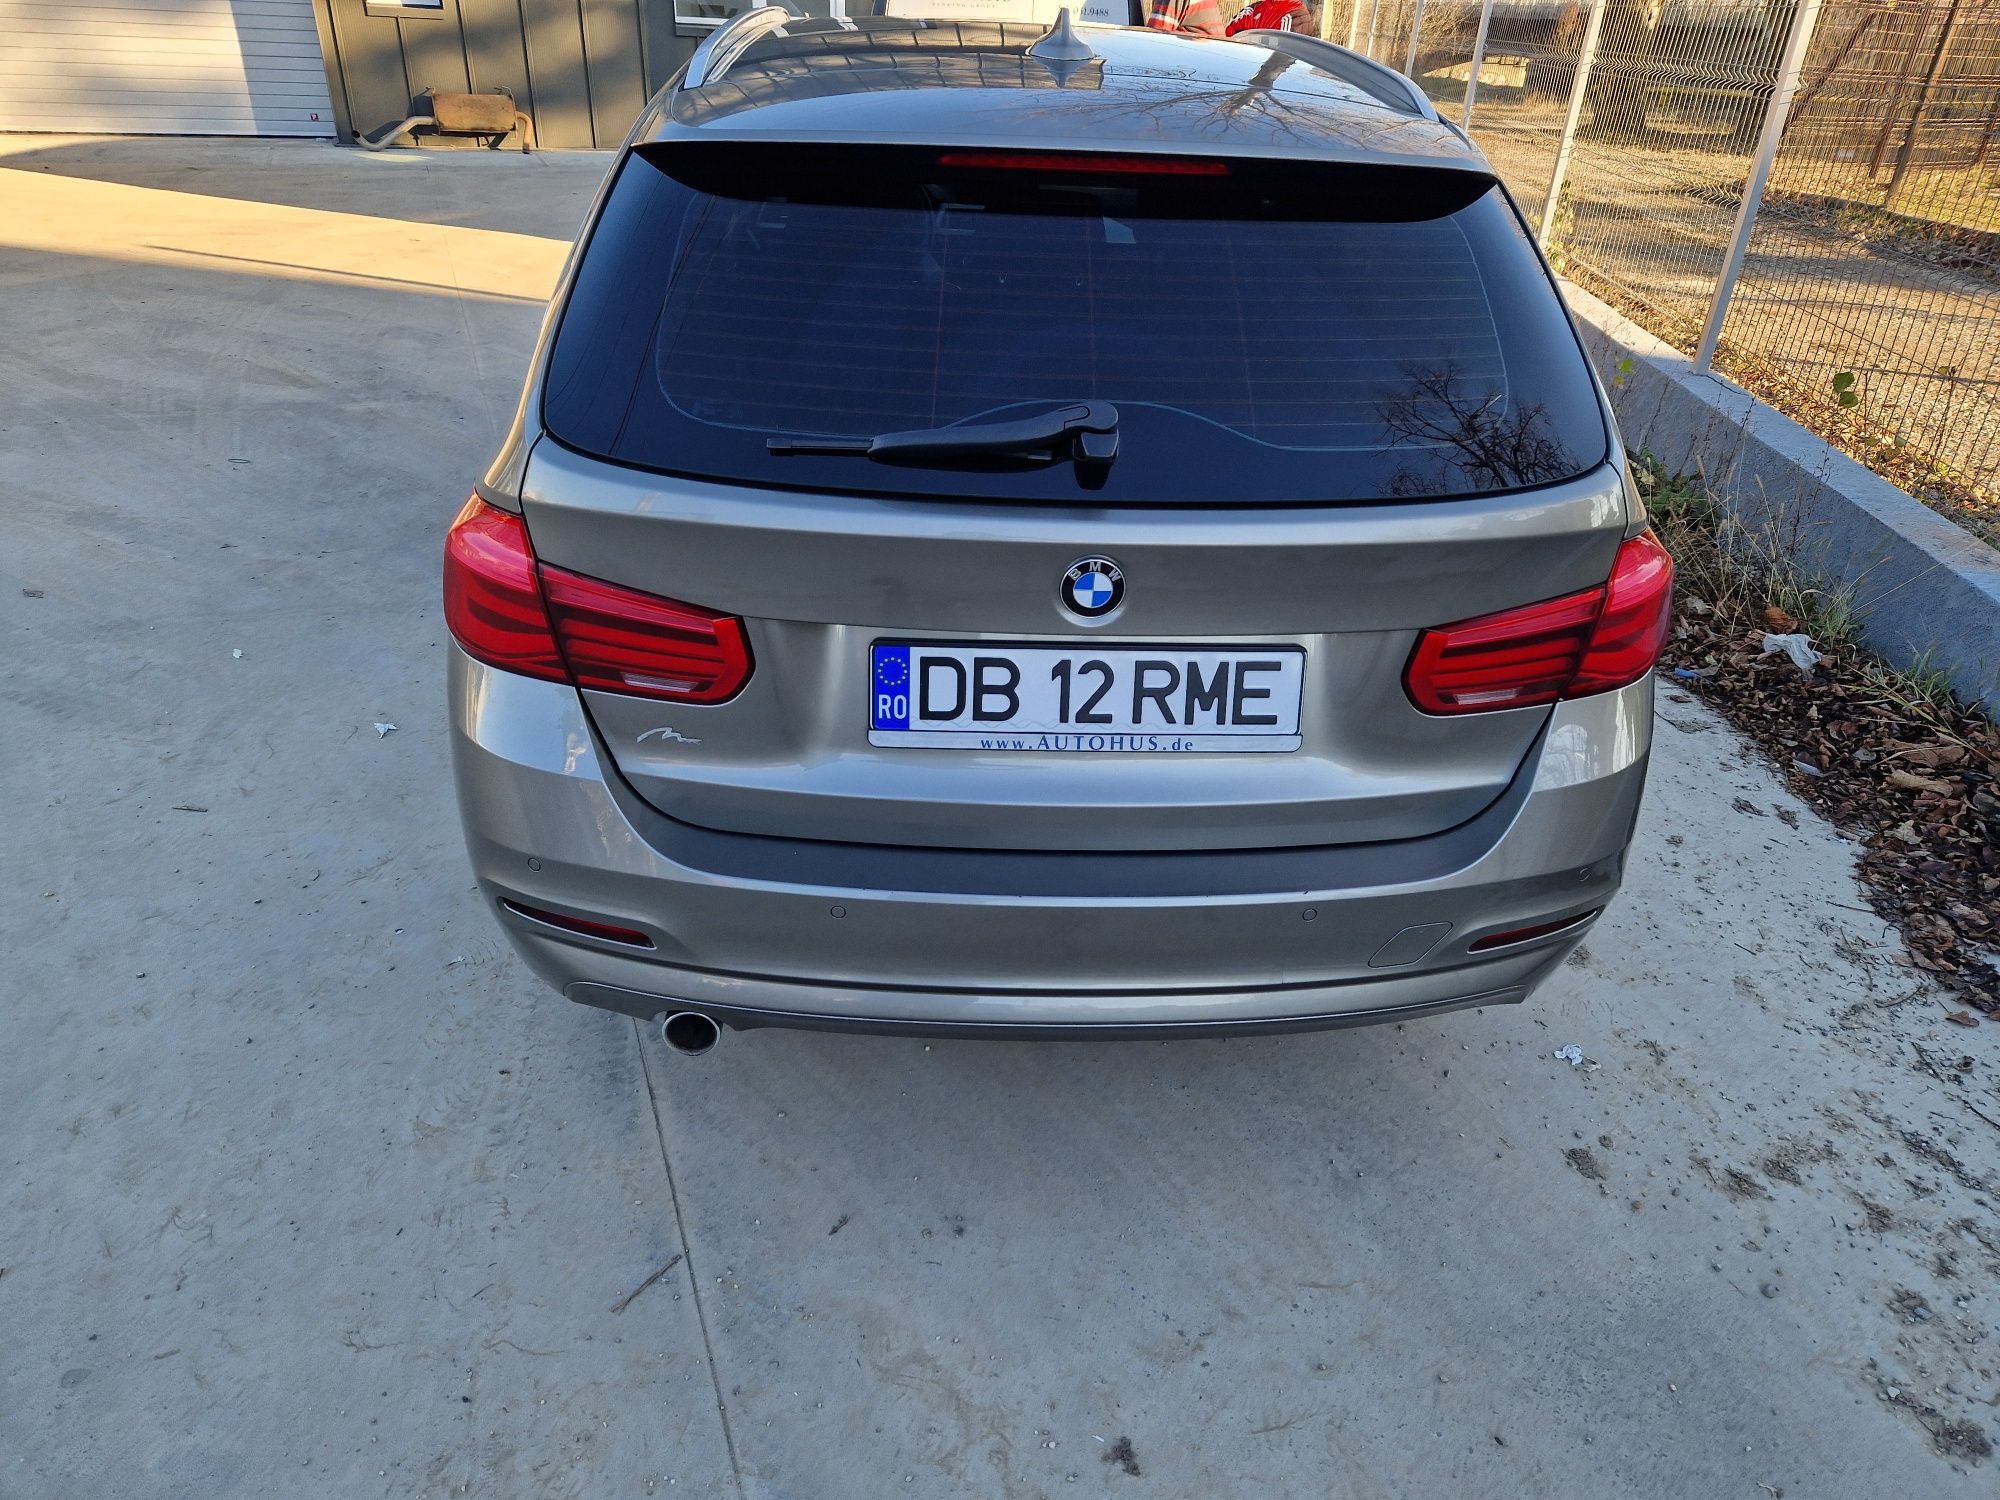 Vând BMW seria 3 diesel 2015 euro6